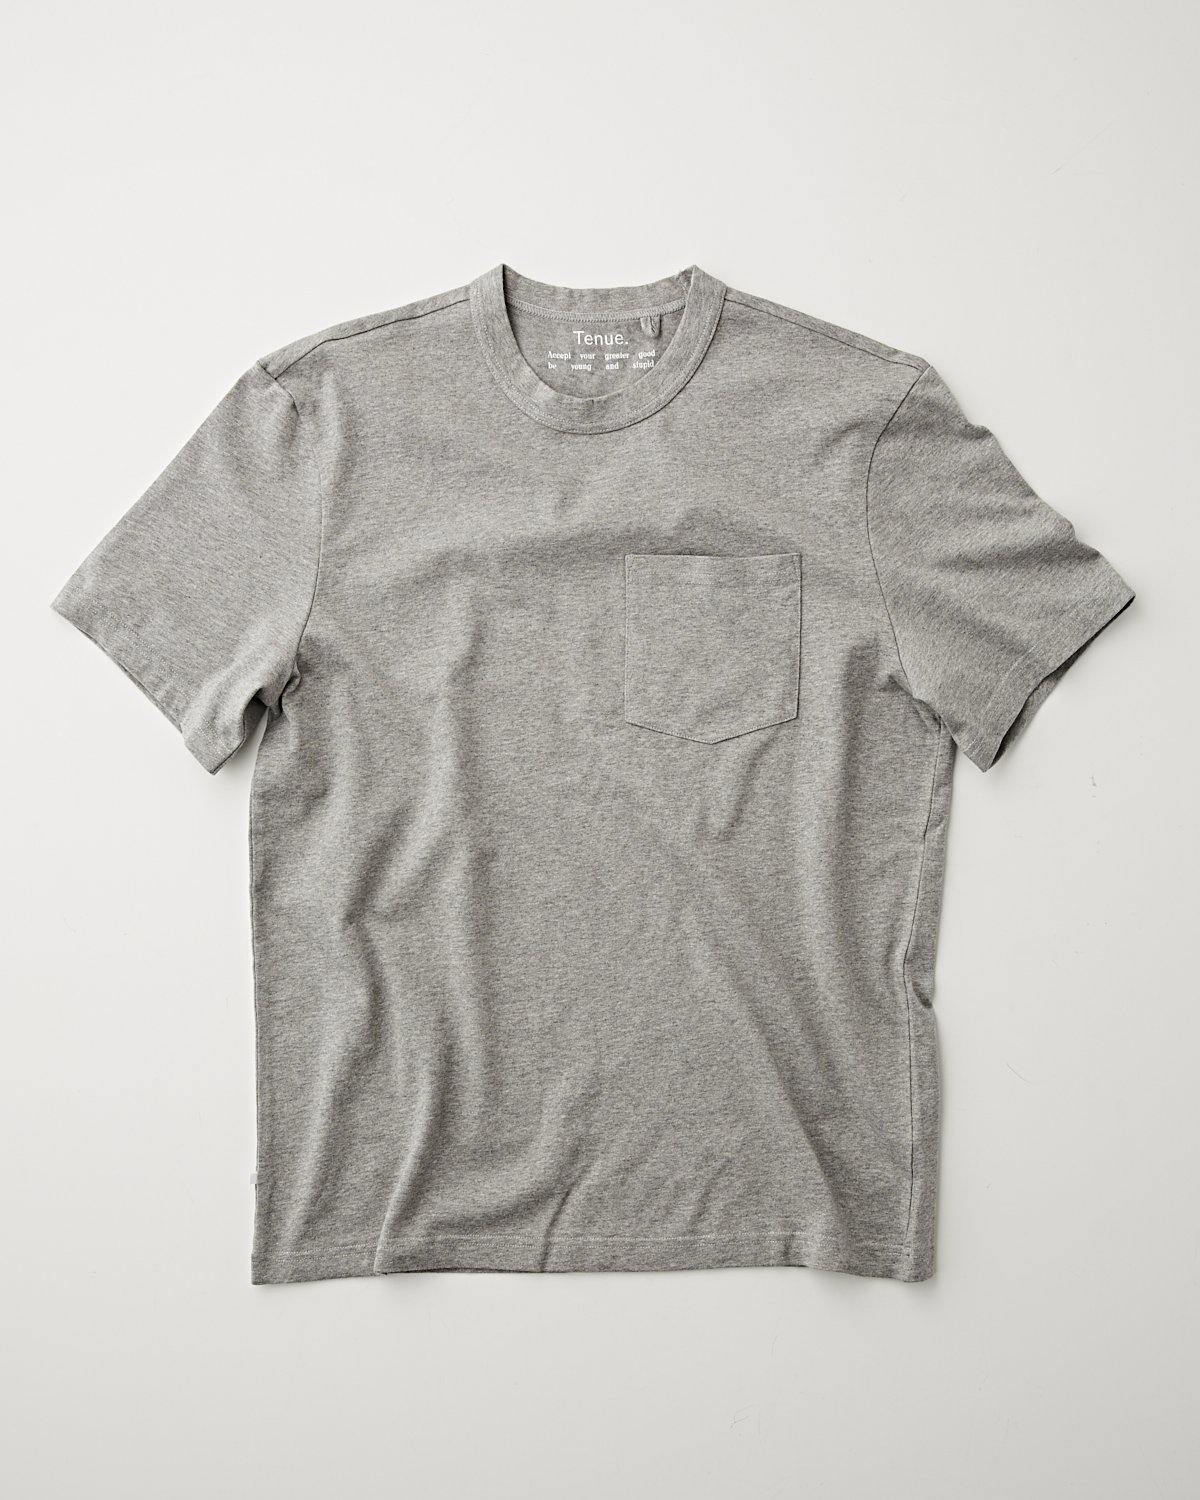 Tenue. John Pocket Tee Heather Grey T-shirt S/S Men